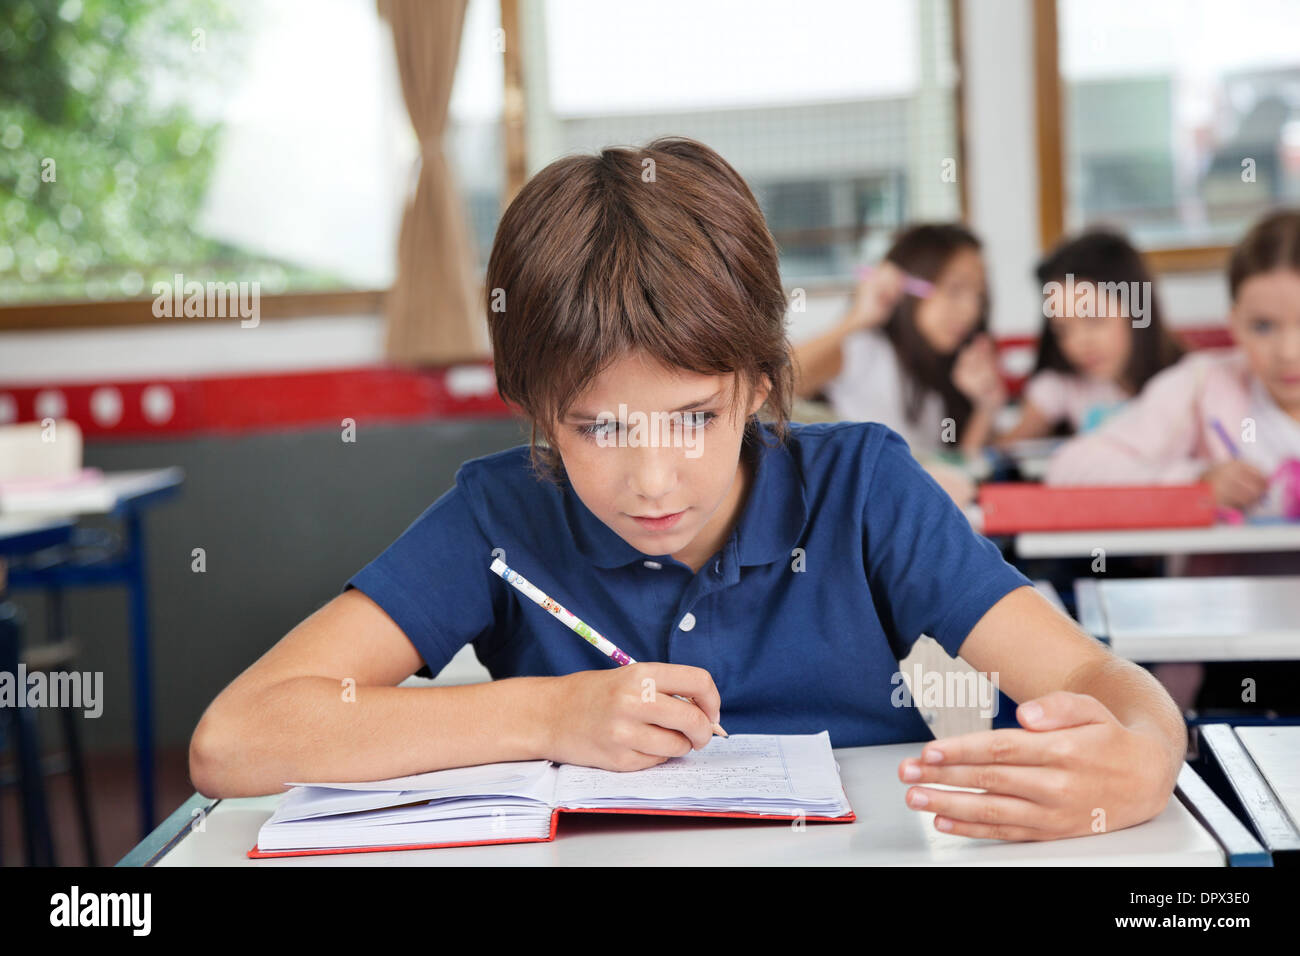 Schoolboy Cheating At Desk During Examination Stock Photo